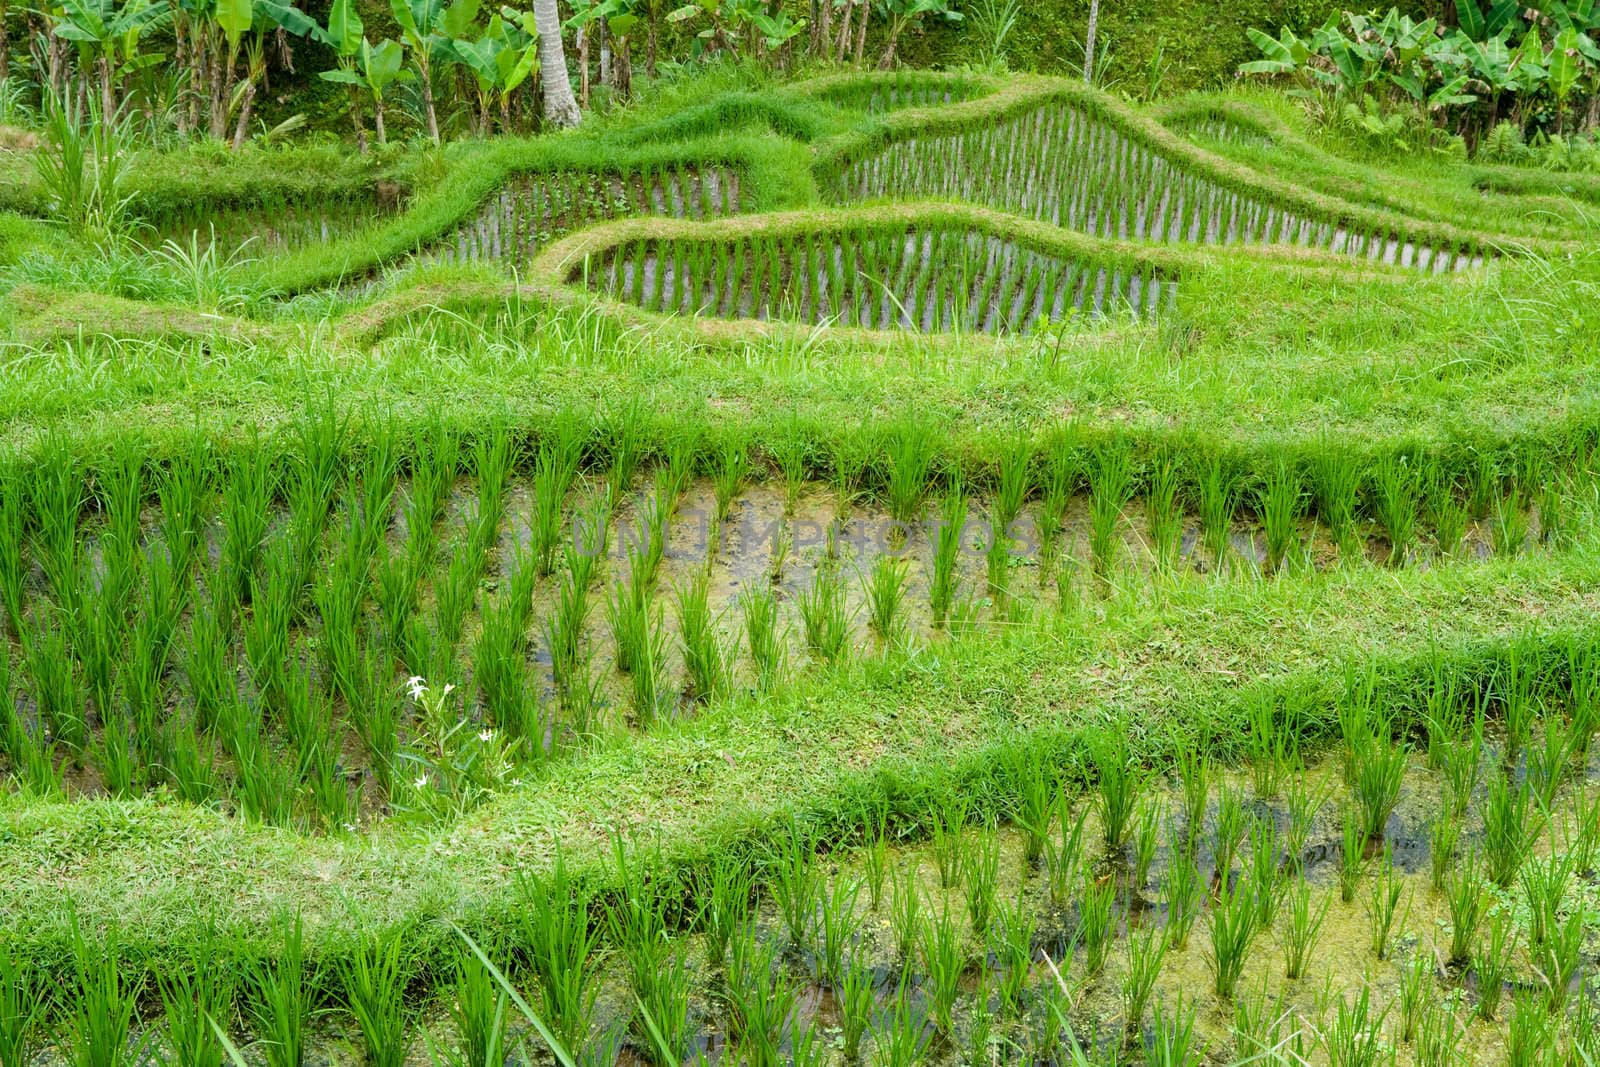 Green classic rice terraces in Indonesia (Bali)